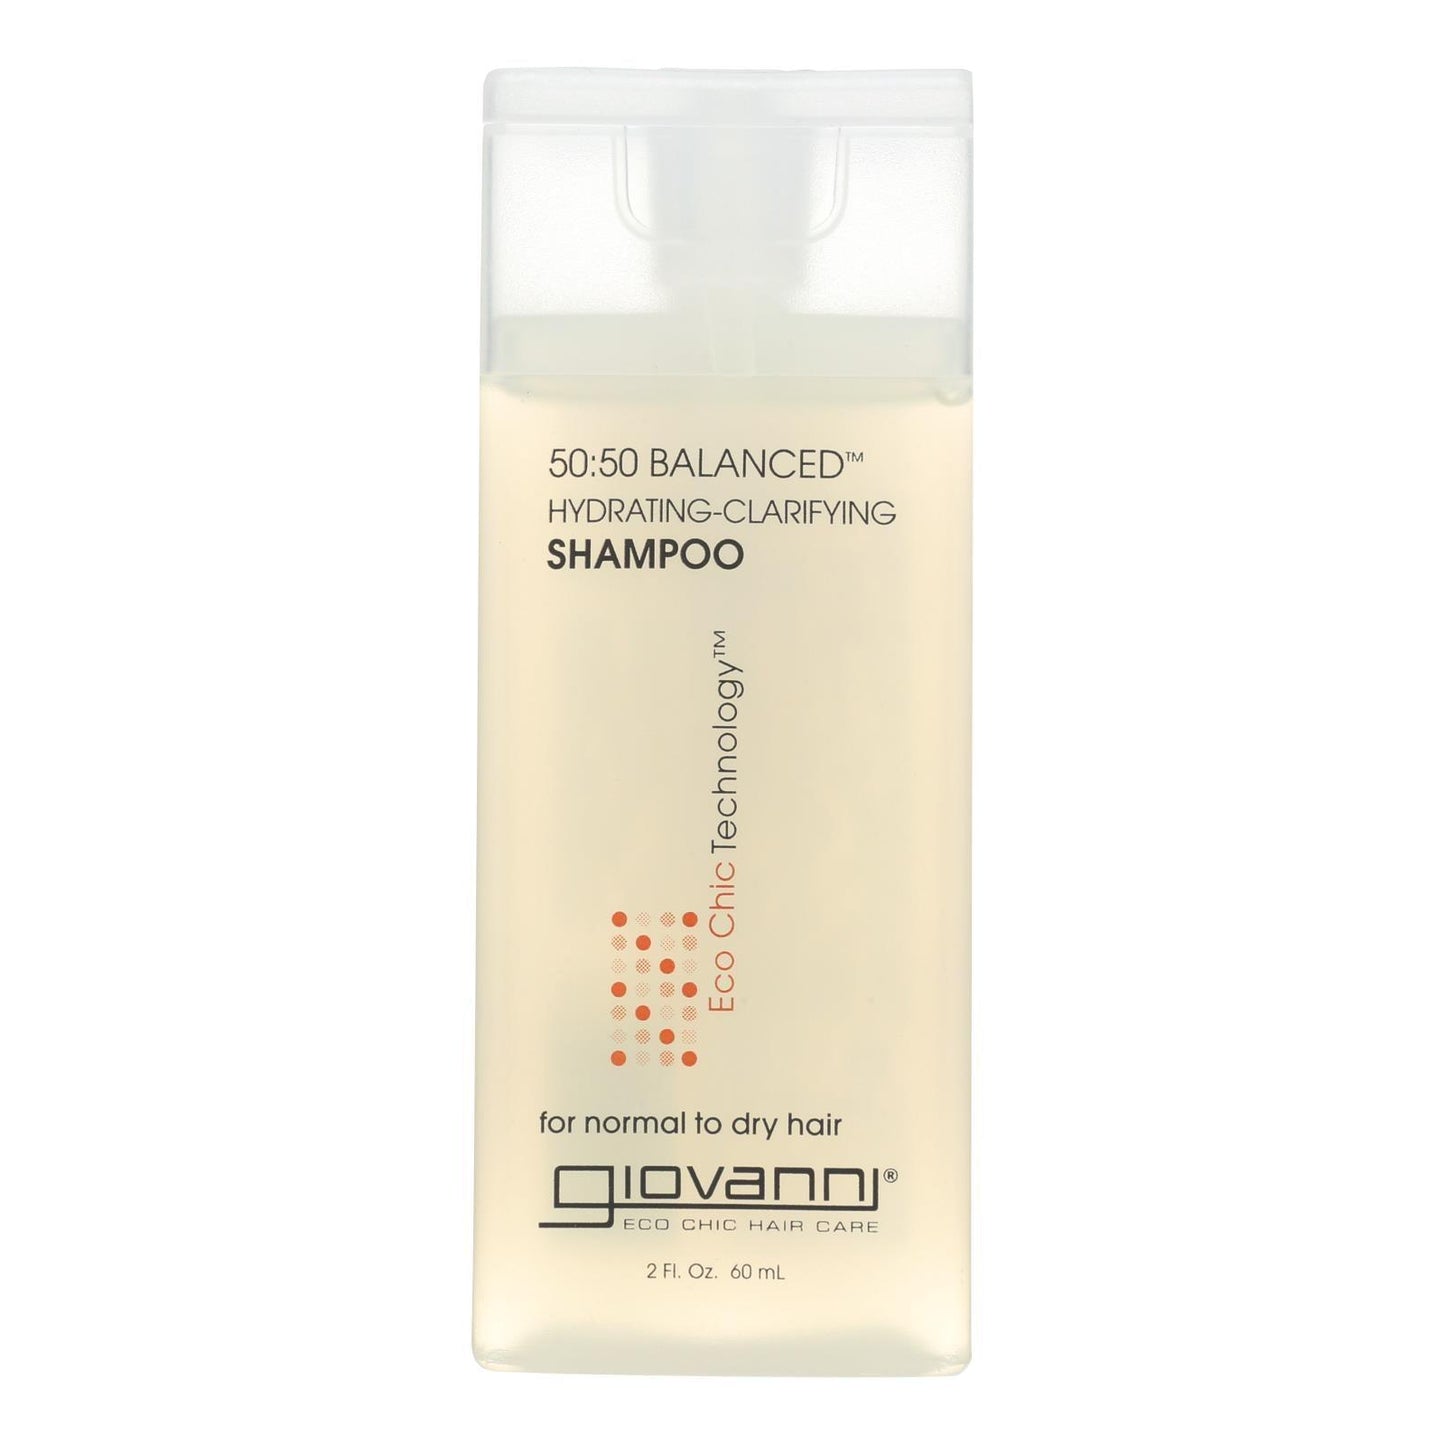 Giovanni Hair Care Products 50/50 Balanced Shampoo - Case Of 12 - 2 Fl Oz - Loomini